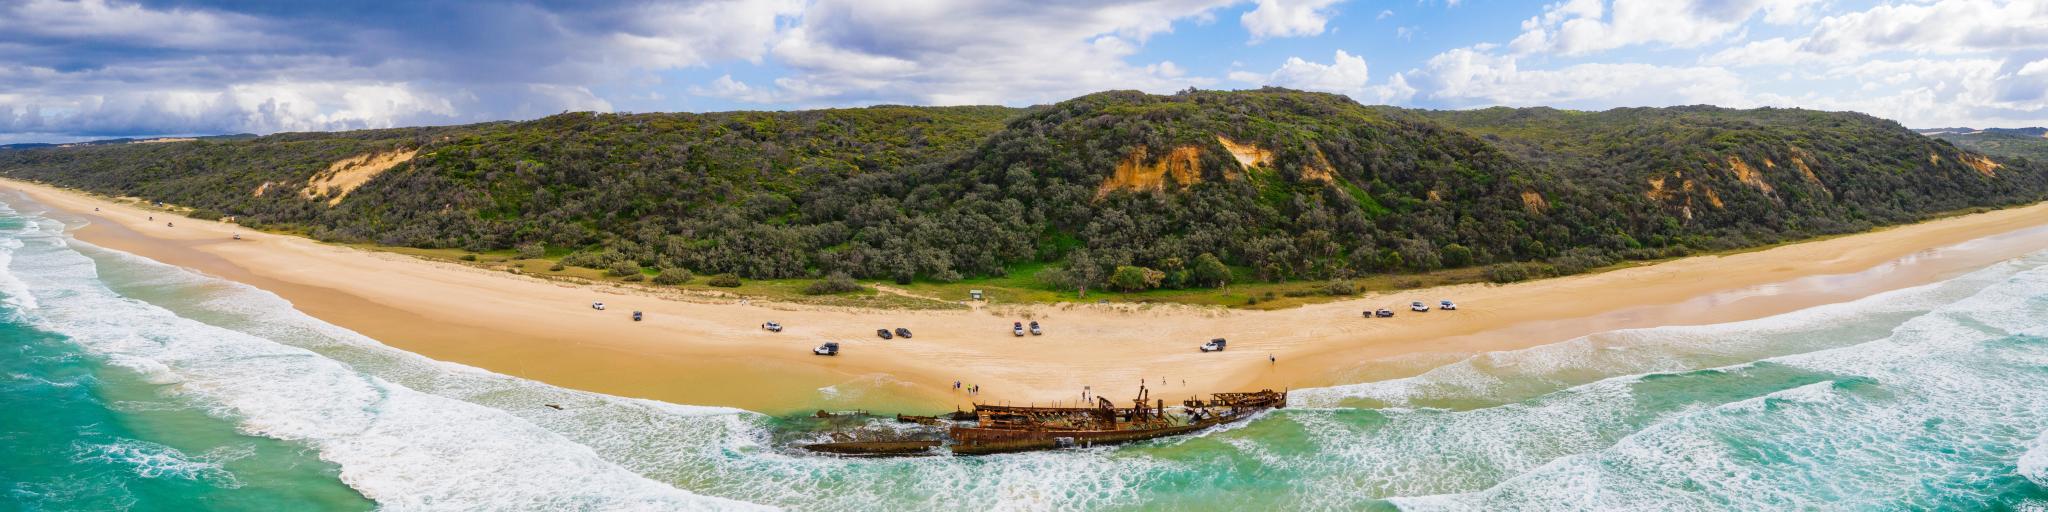 Panorama of the Maheno shipwreck on Fraser Island, Queensland, Australia